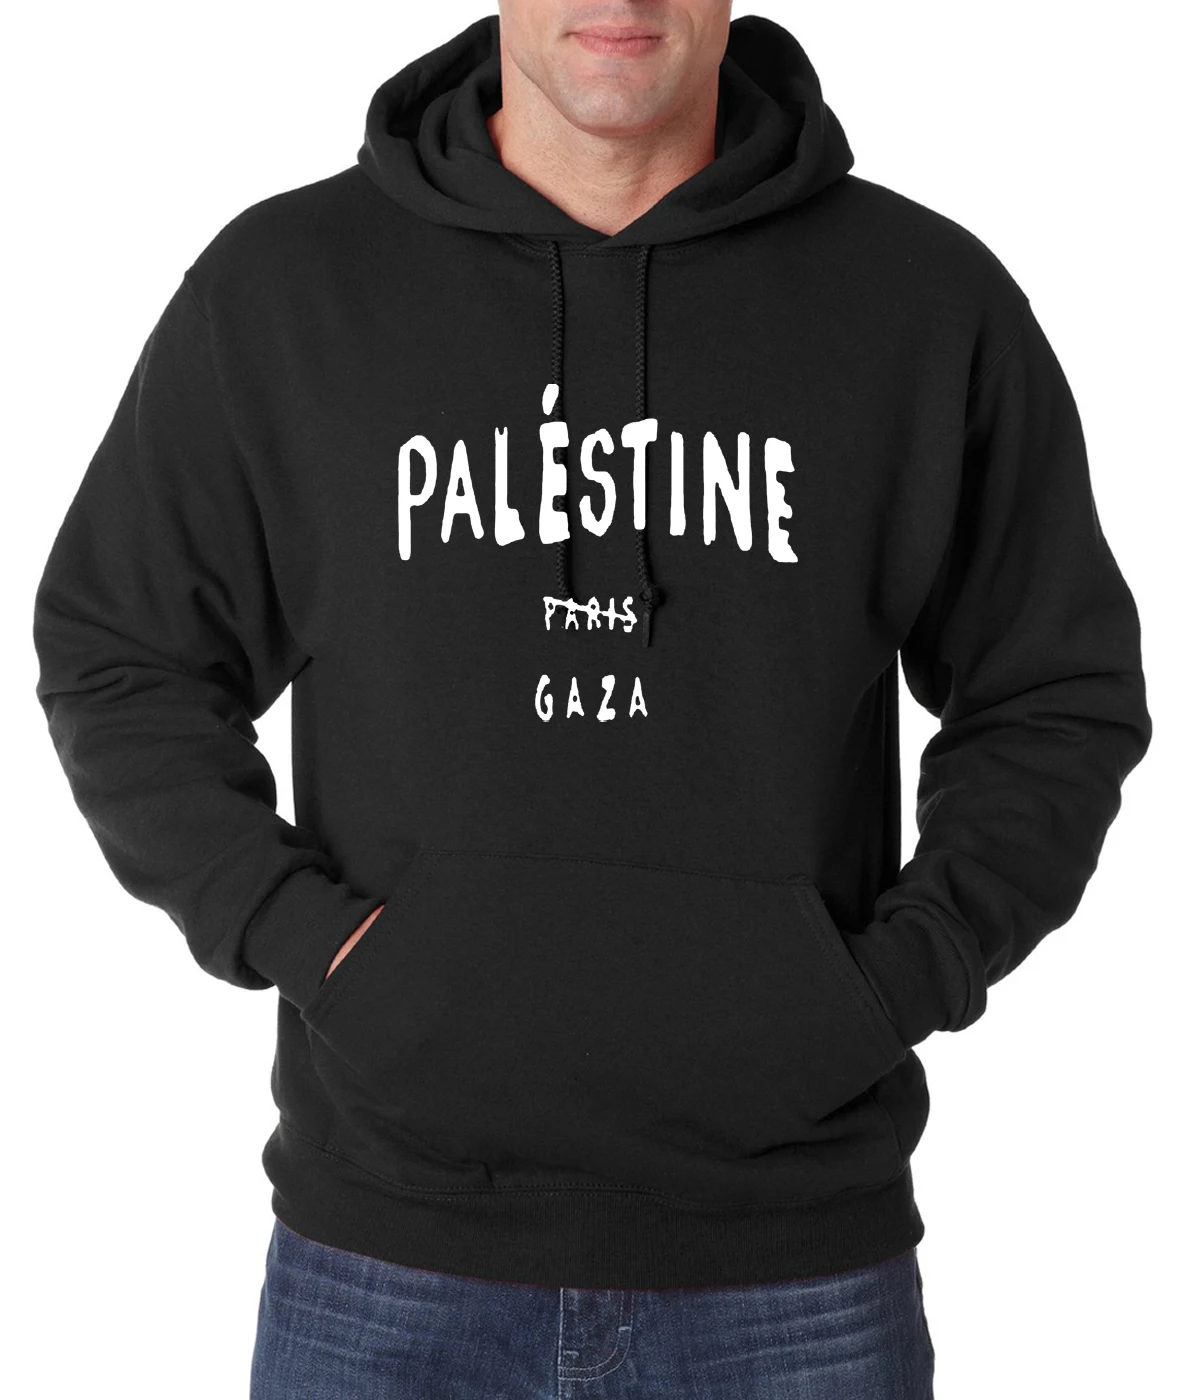 

new arrival Gaza Palestine is not blong to Paris funny hoodie 2019 autumn winter new sweatshirt men warm fleece sportswear S-2XL